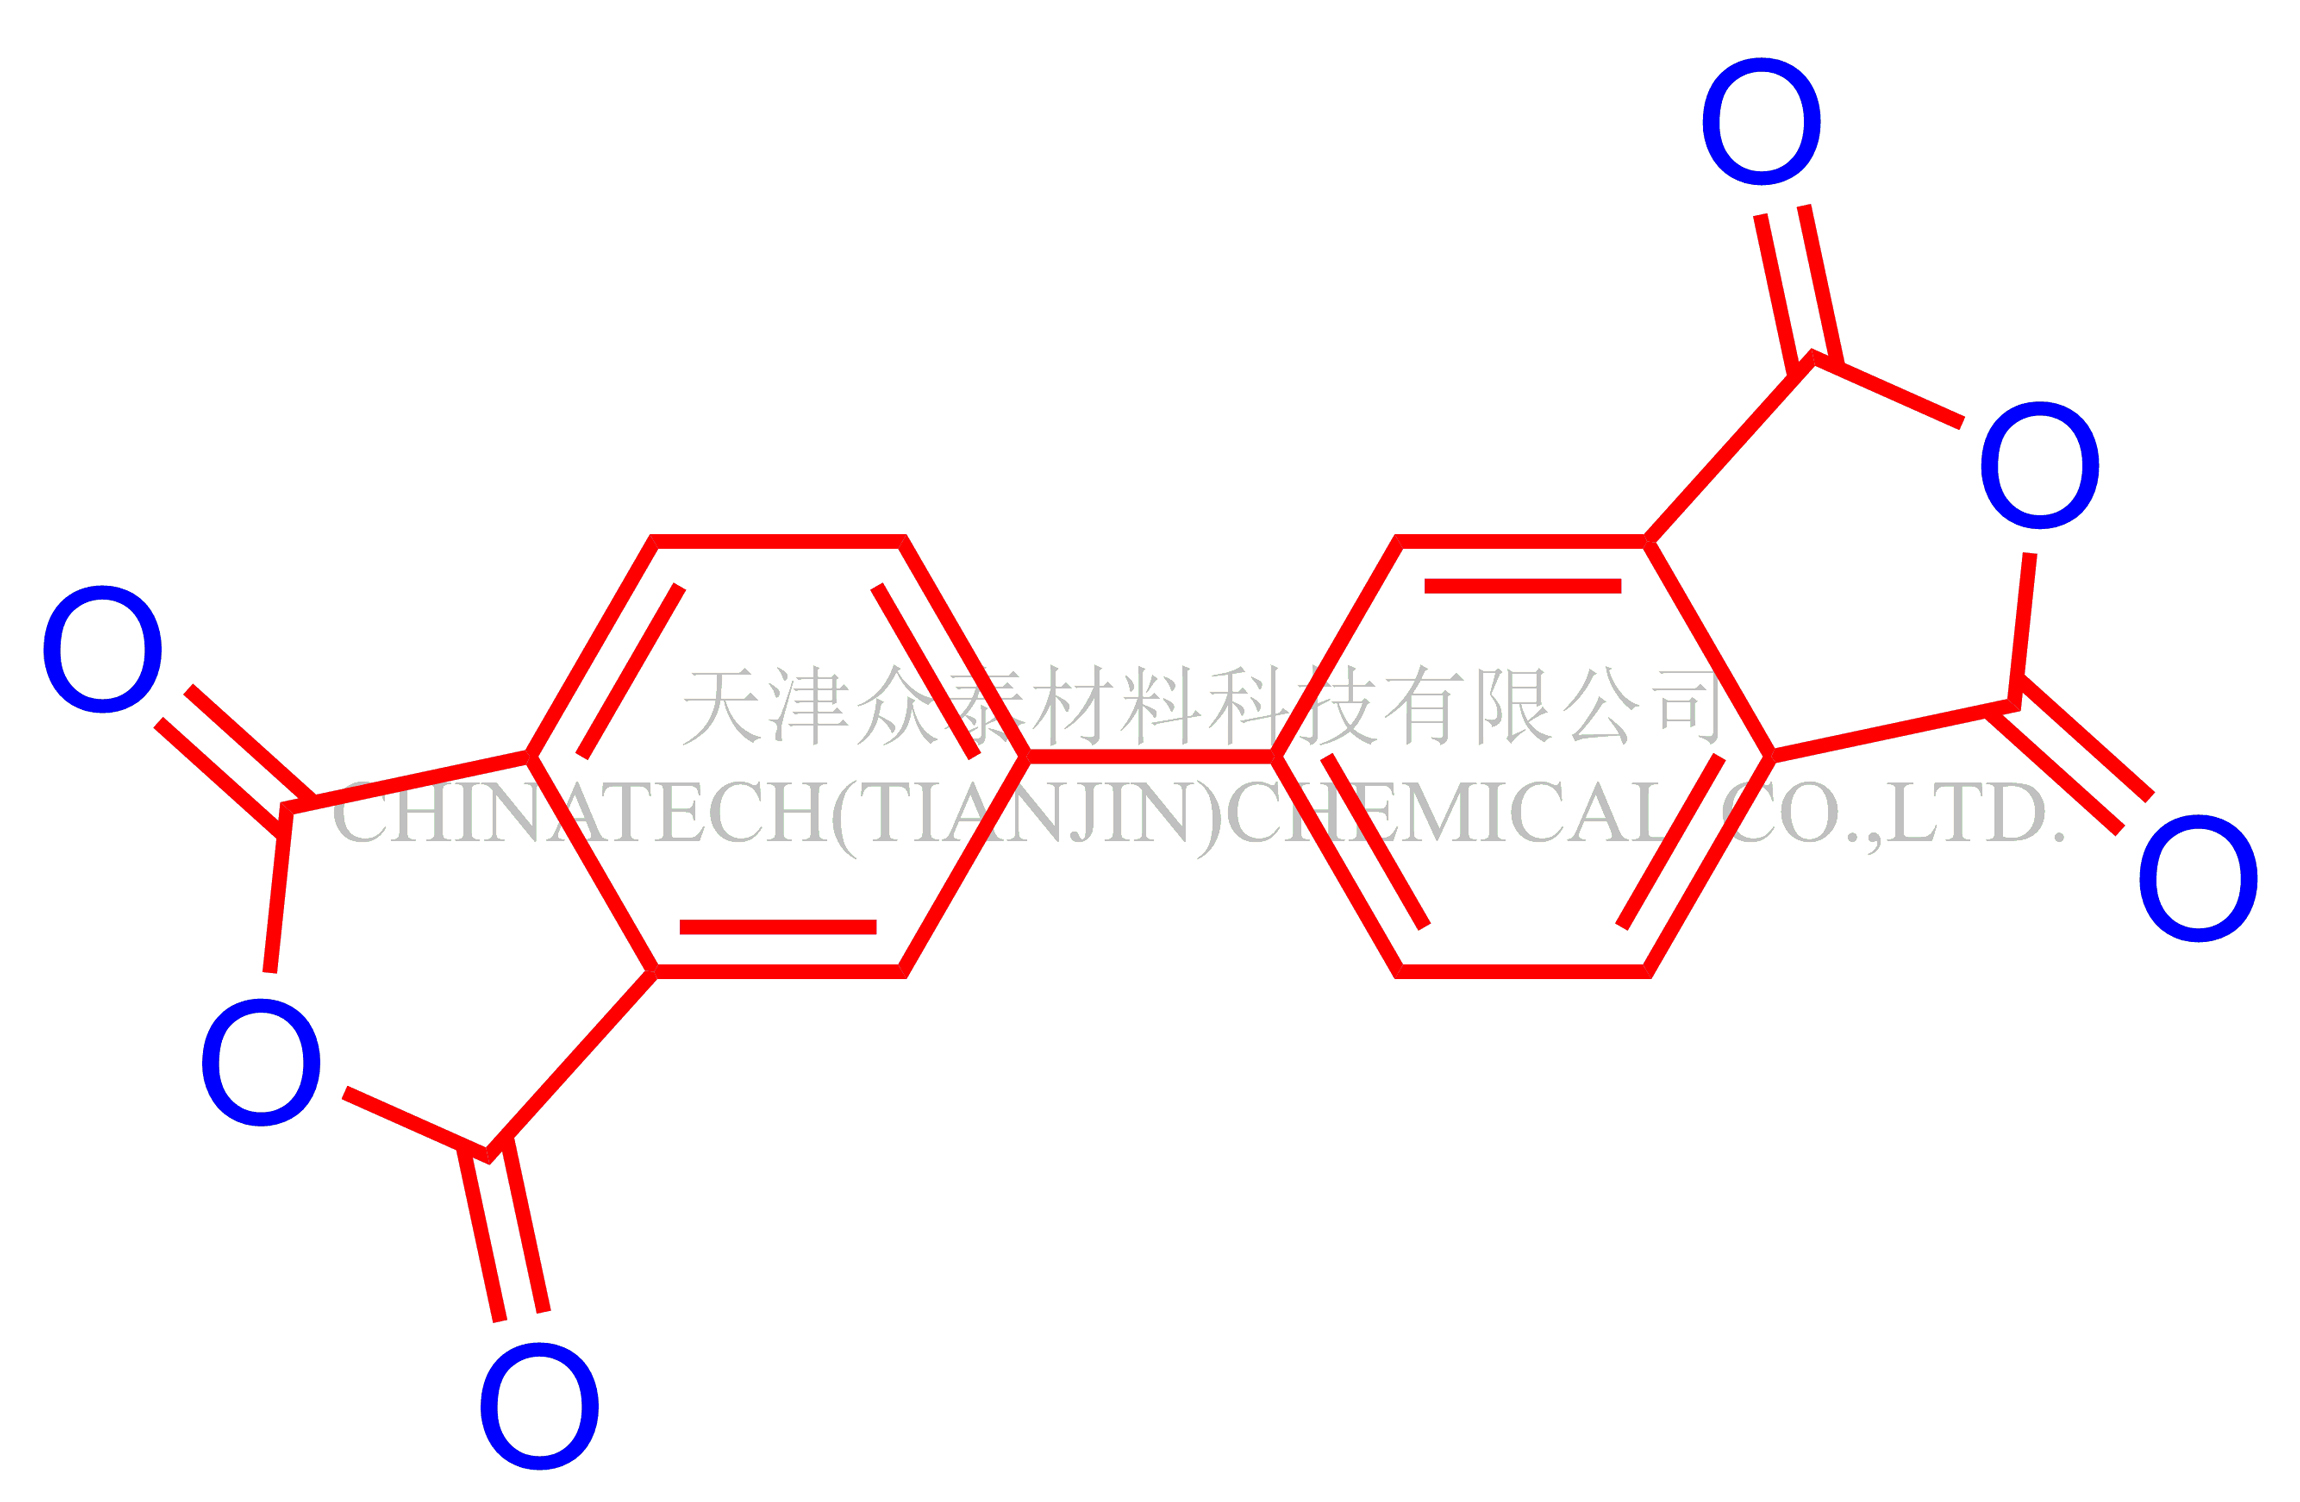 3,3',4,4'-Biphenyltetracarboxylic dianhydride (BPDA)